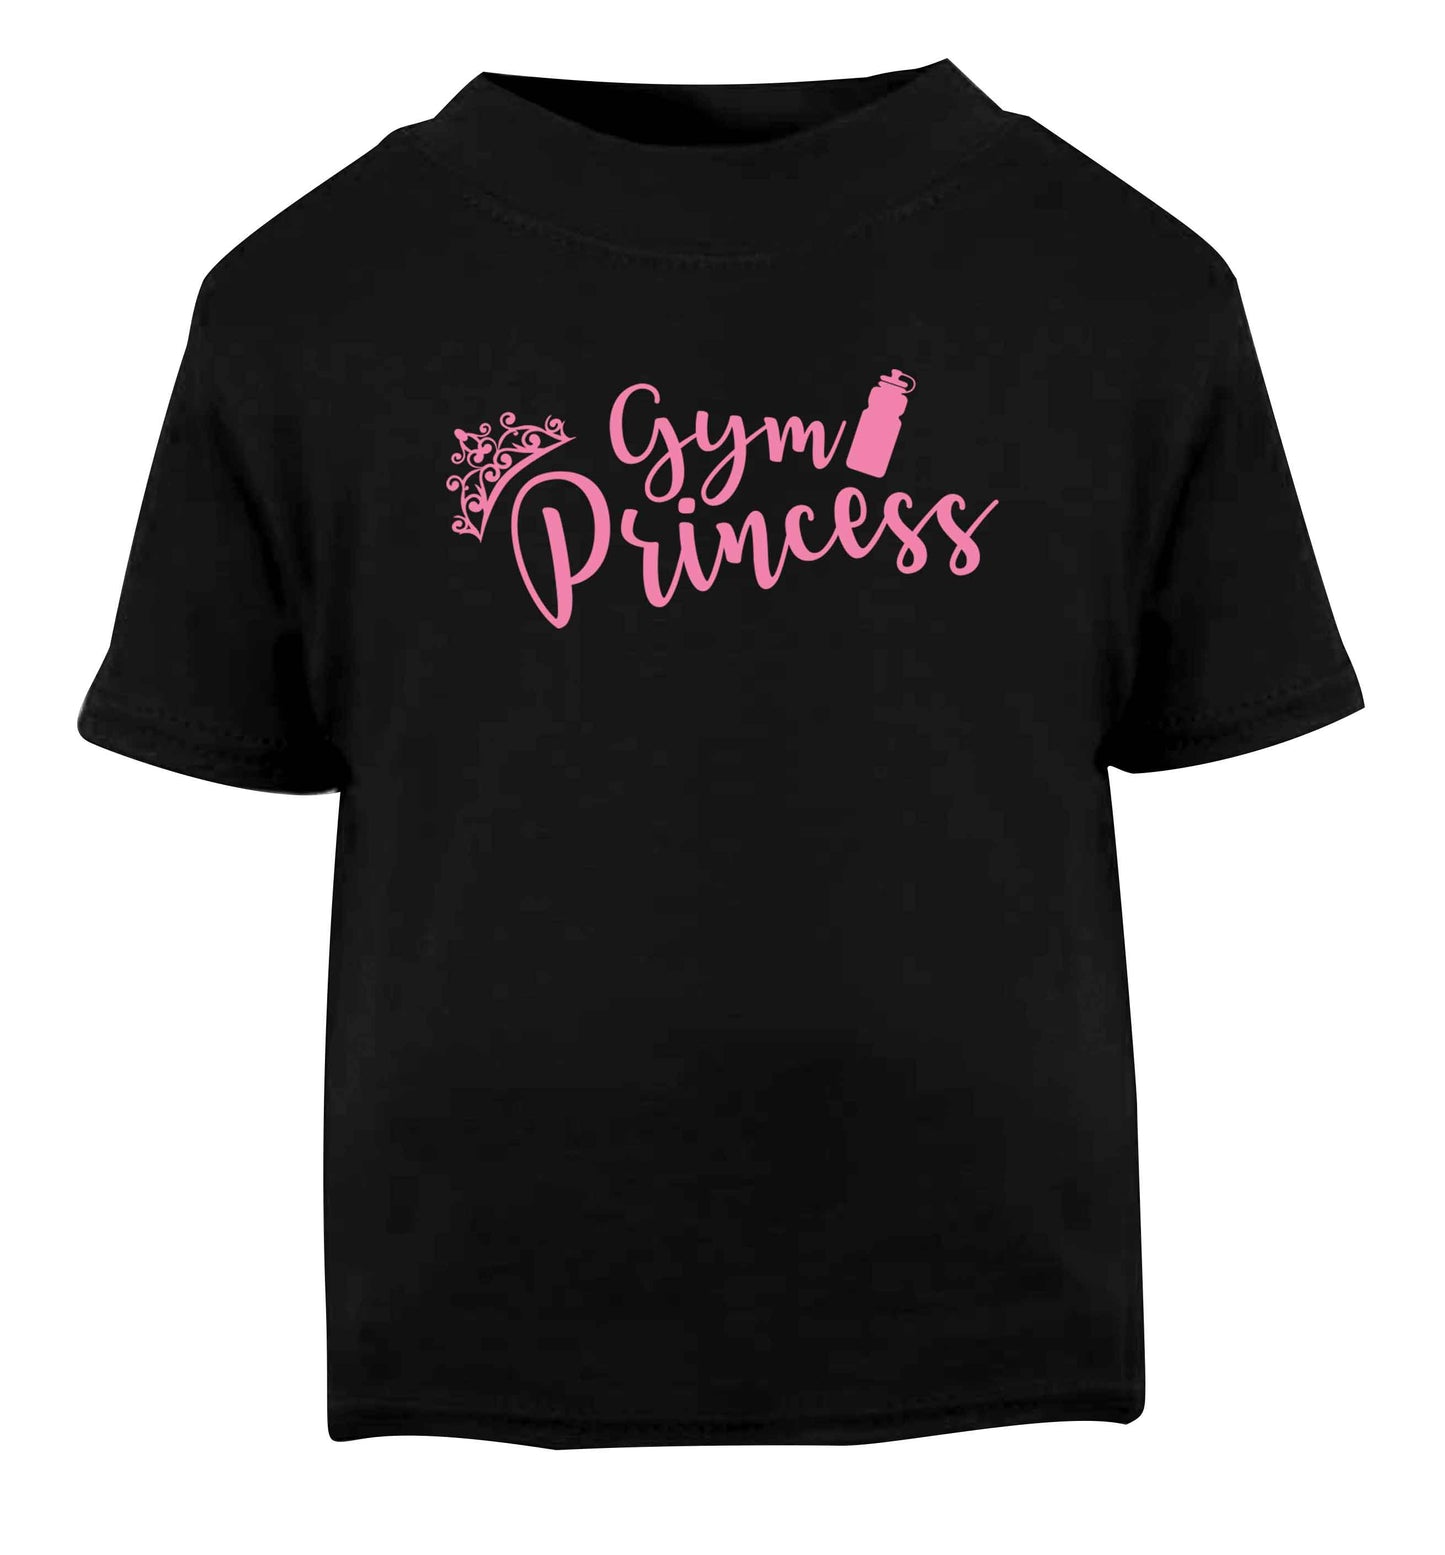 Gym princess Black Baby Toddler Tshirt 2 years